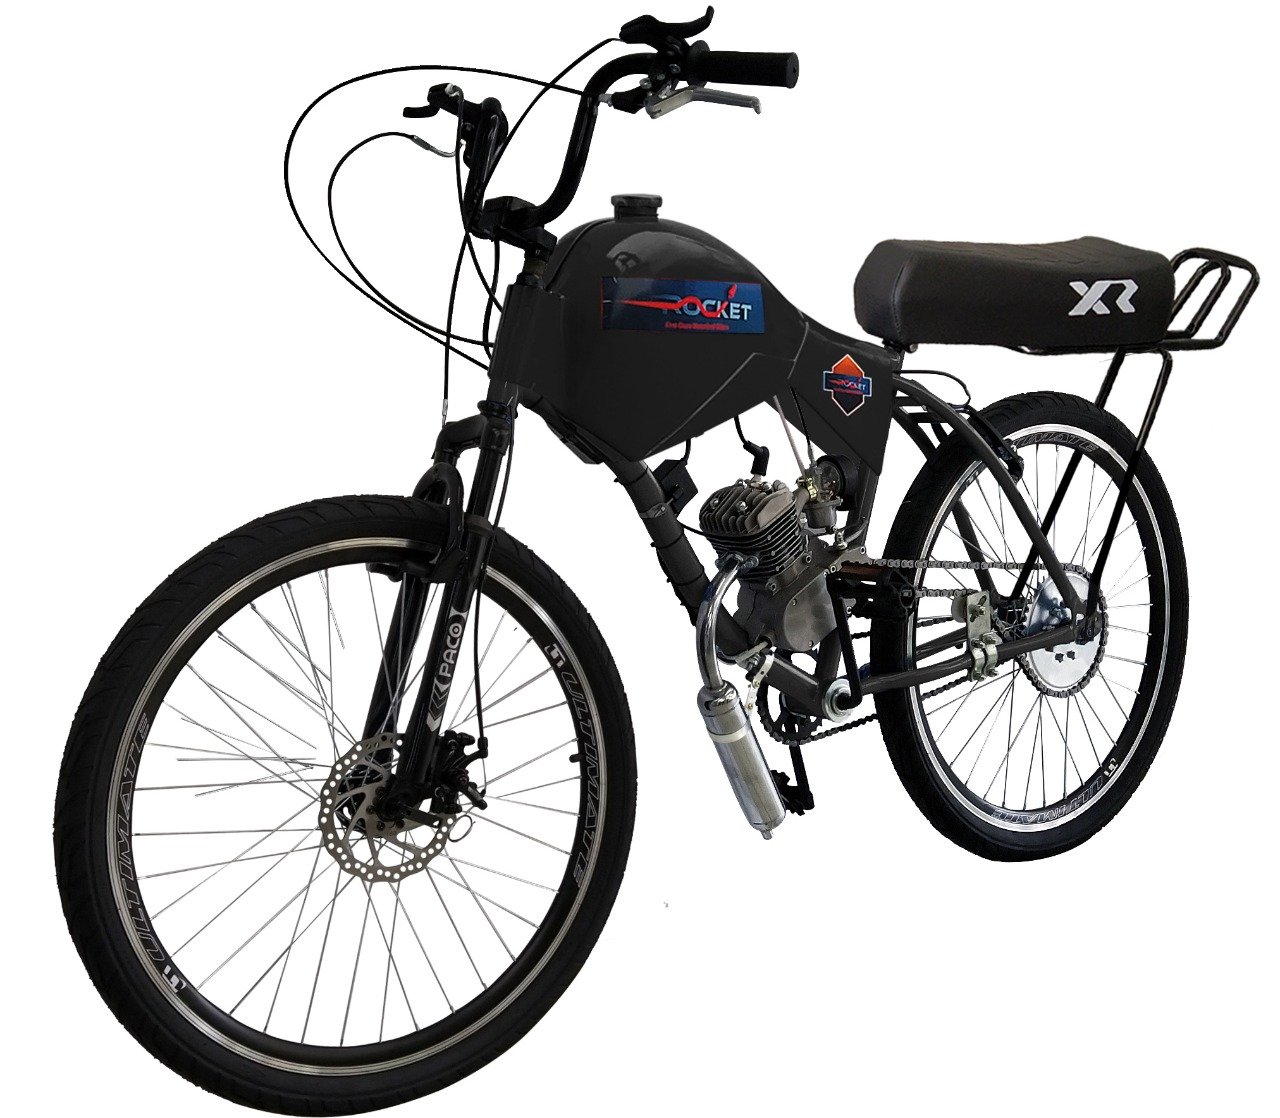 Bicicleta Motorizada 80cc Fr Disc/Susp com Carenagem Banco XR Rocket - 1